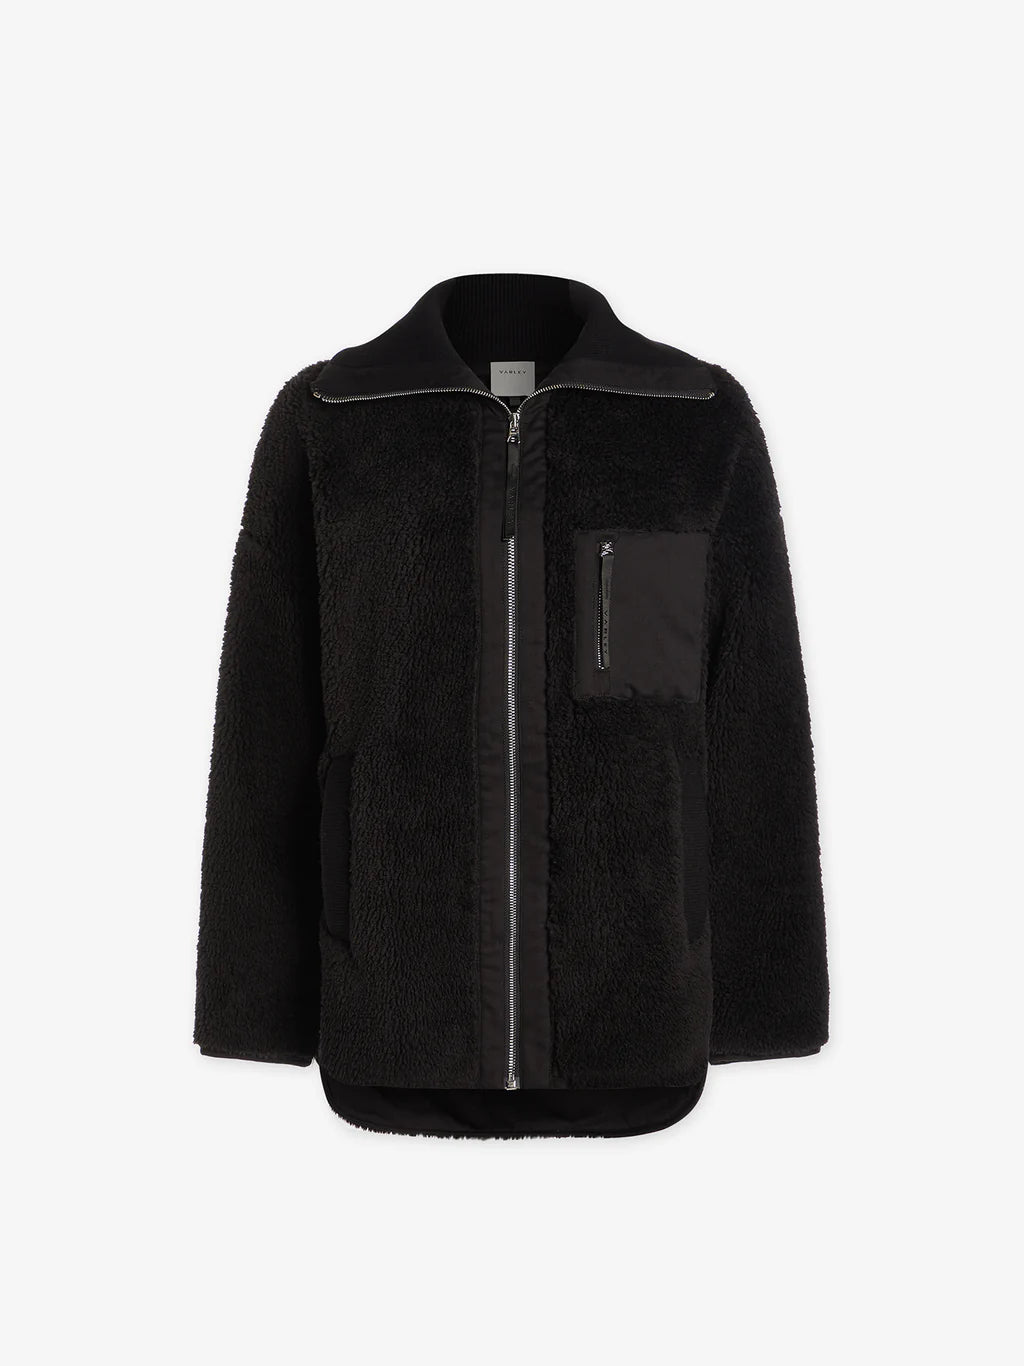 Black fleece jacket with full length silver metallic